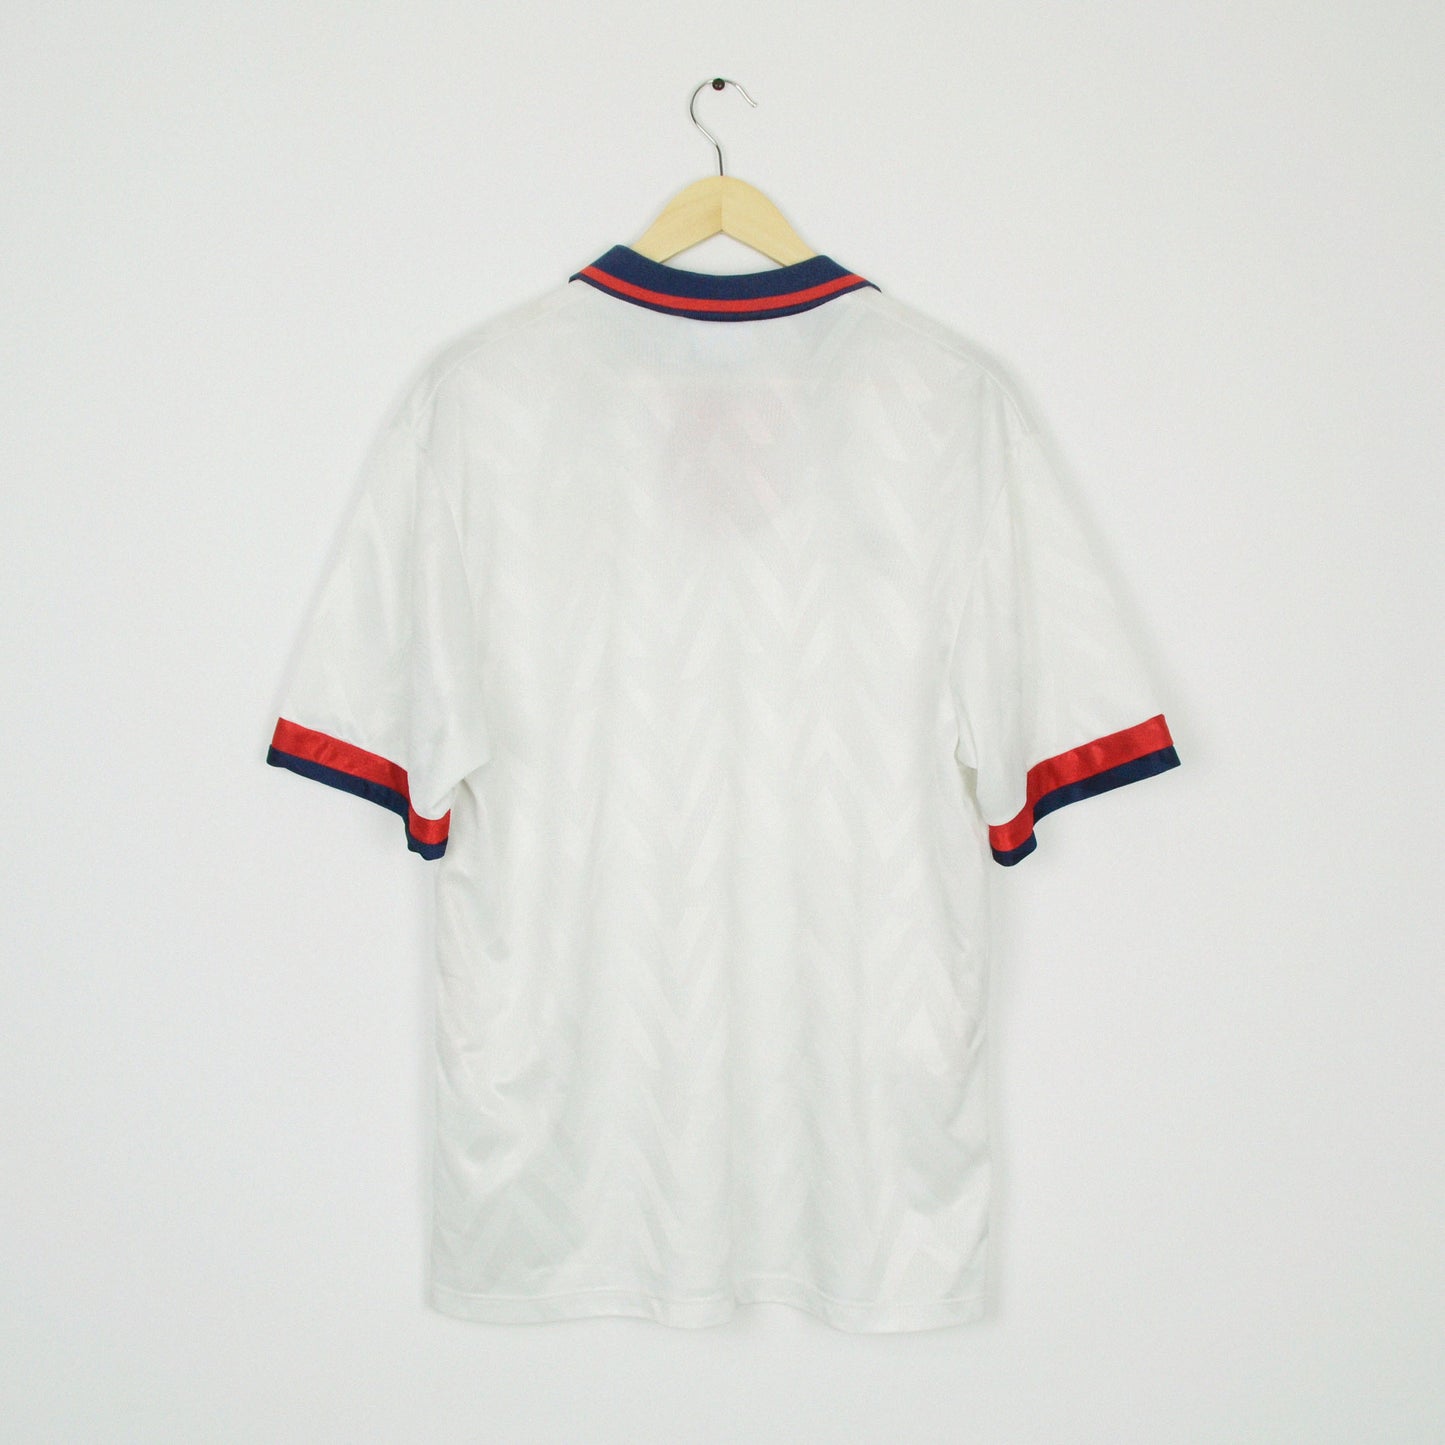 1992-94 Umbro Cagliari Home Shirt L